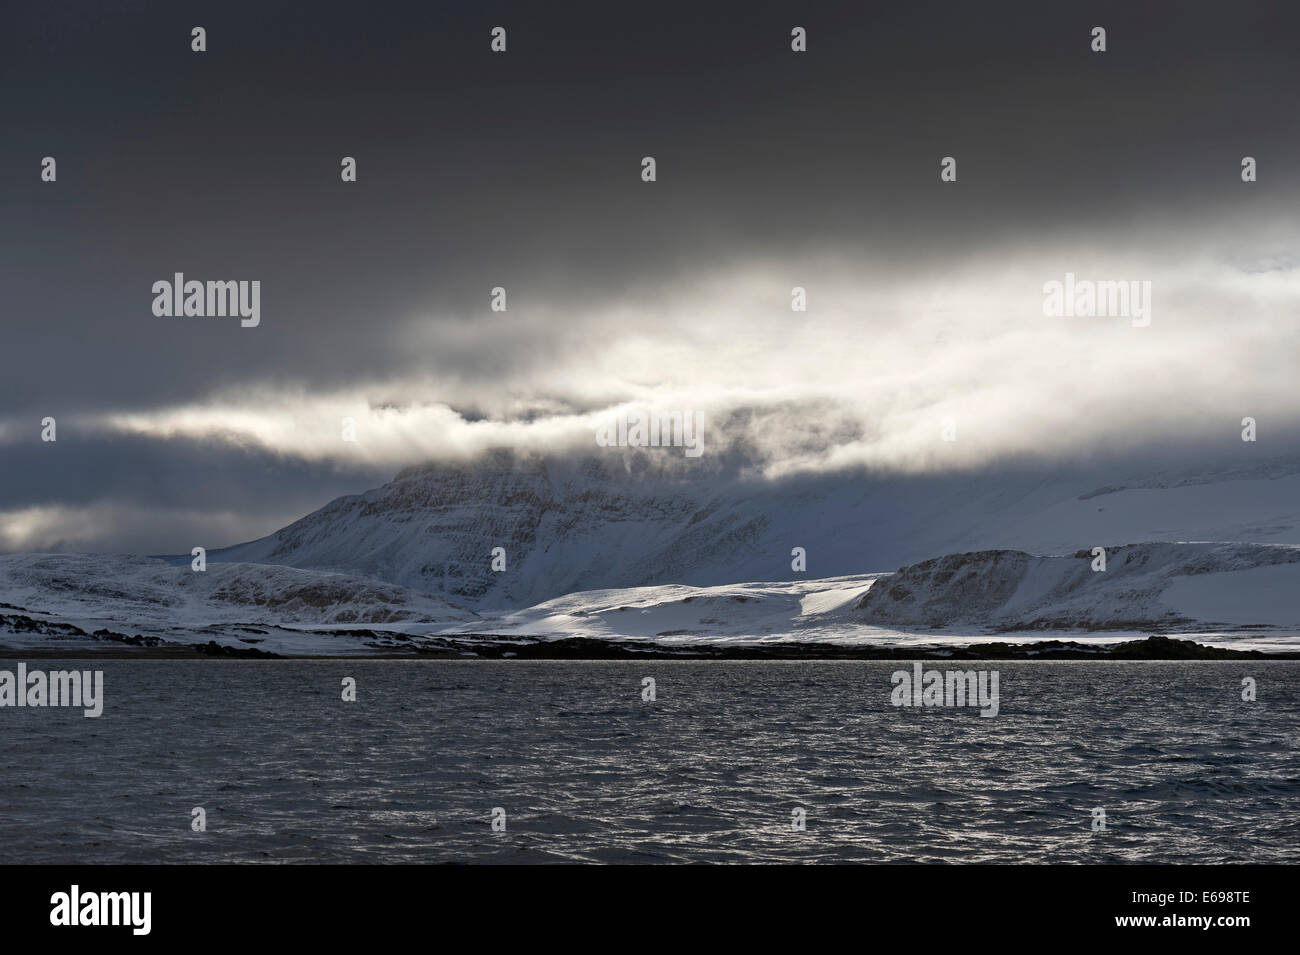 Drammatica luce atmosferica, Reliktbukta, Nordaustland, arcipelago delle Svalbard Isole Svalbard e Jan Mayen, Norvegia Foto Stock